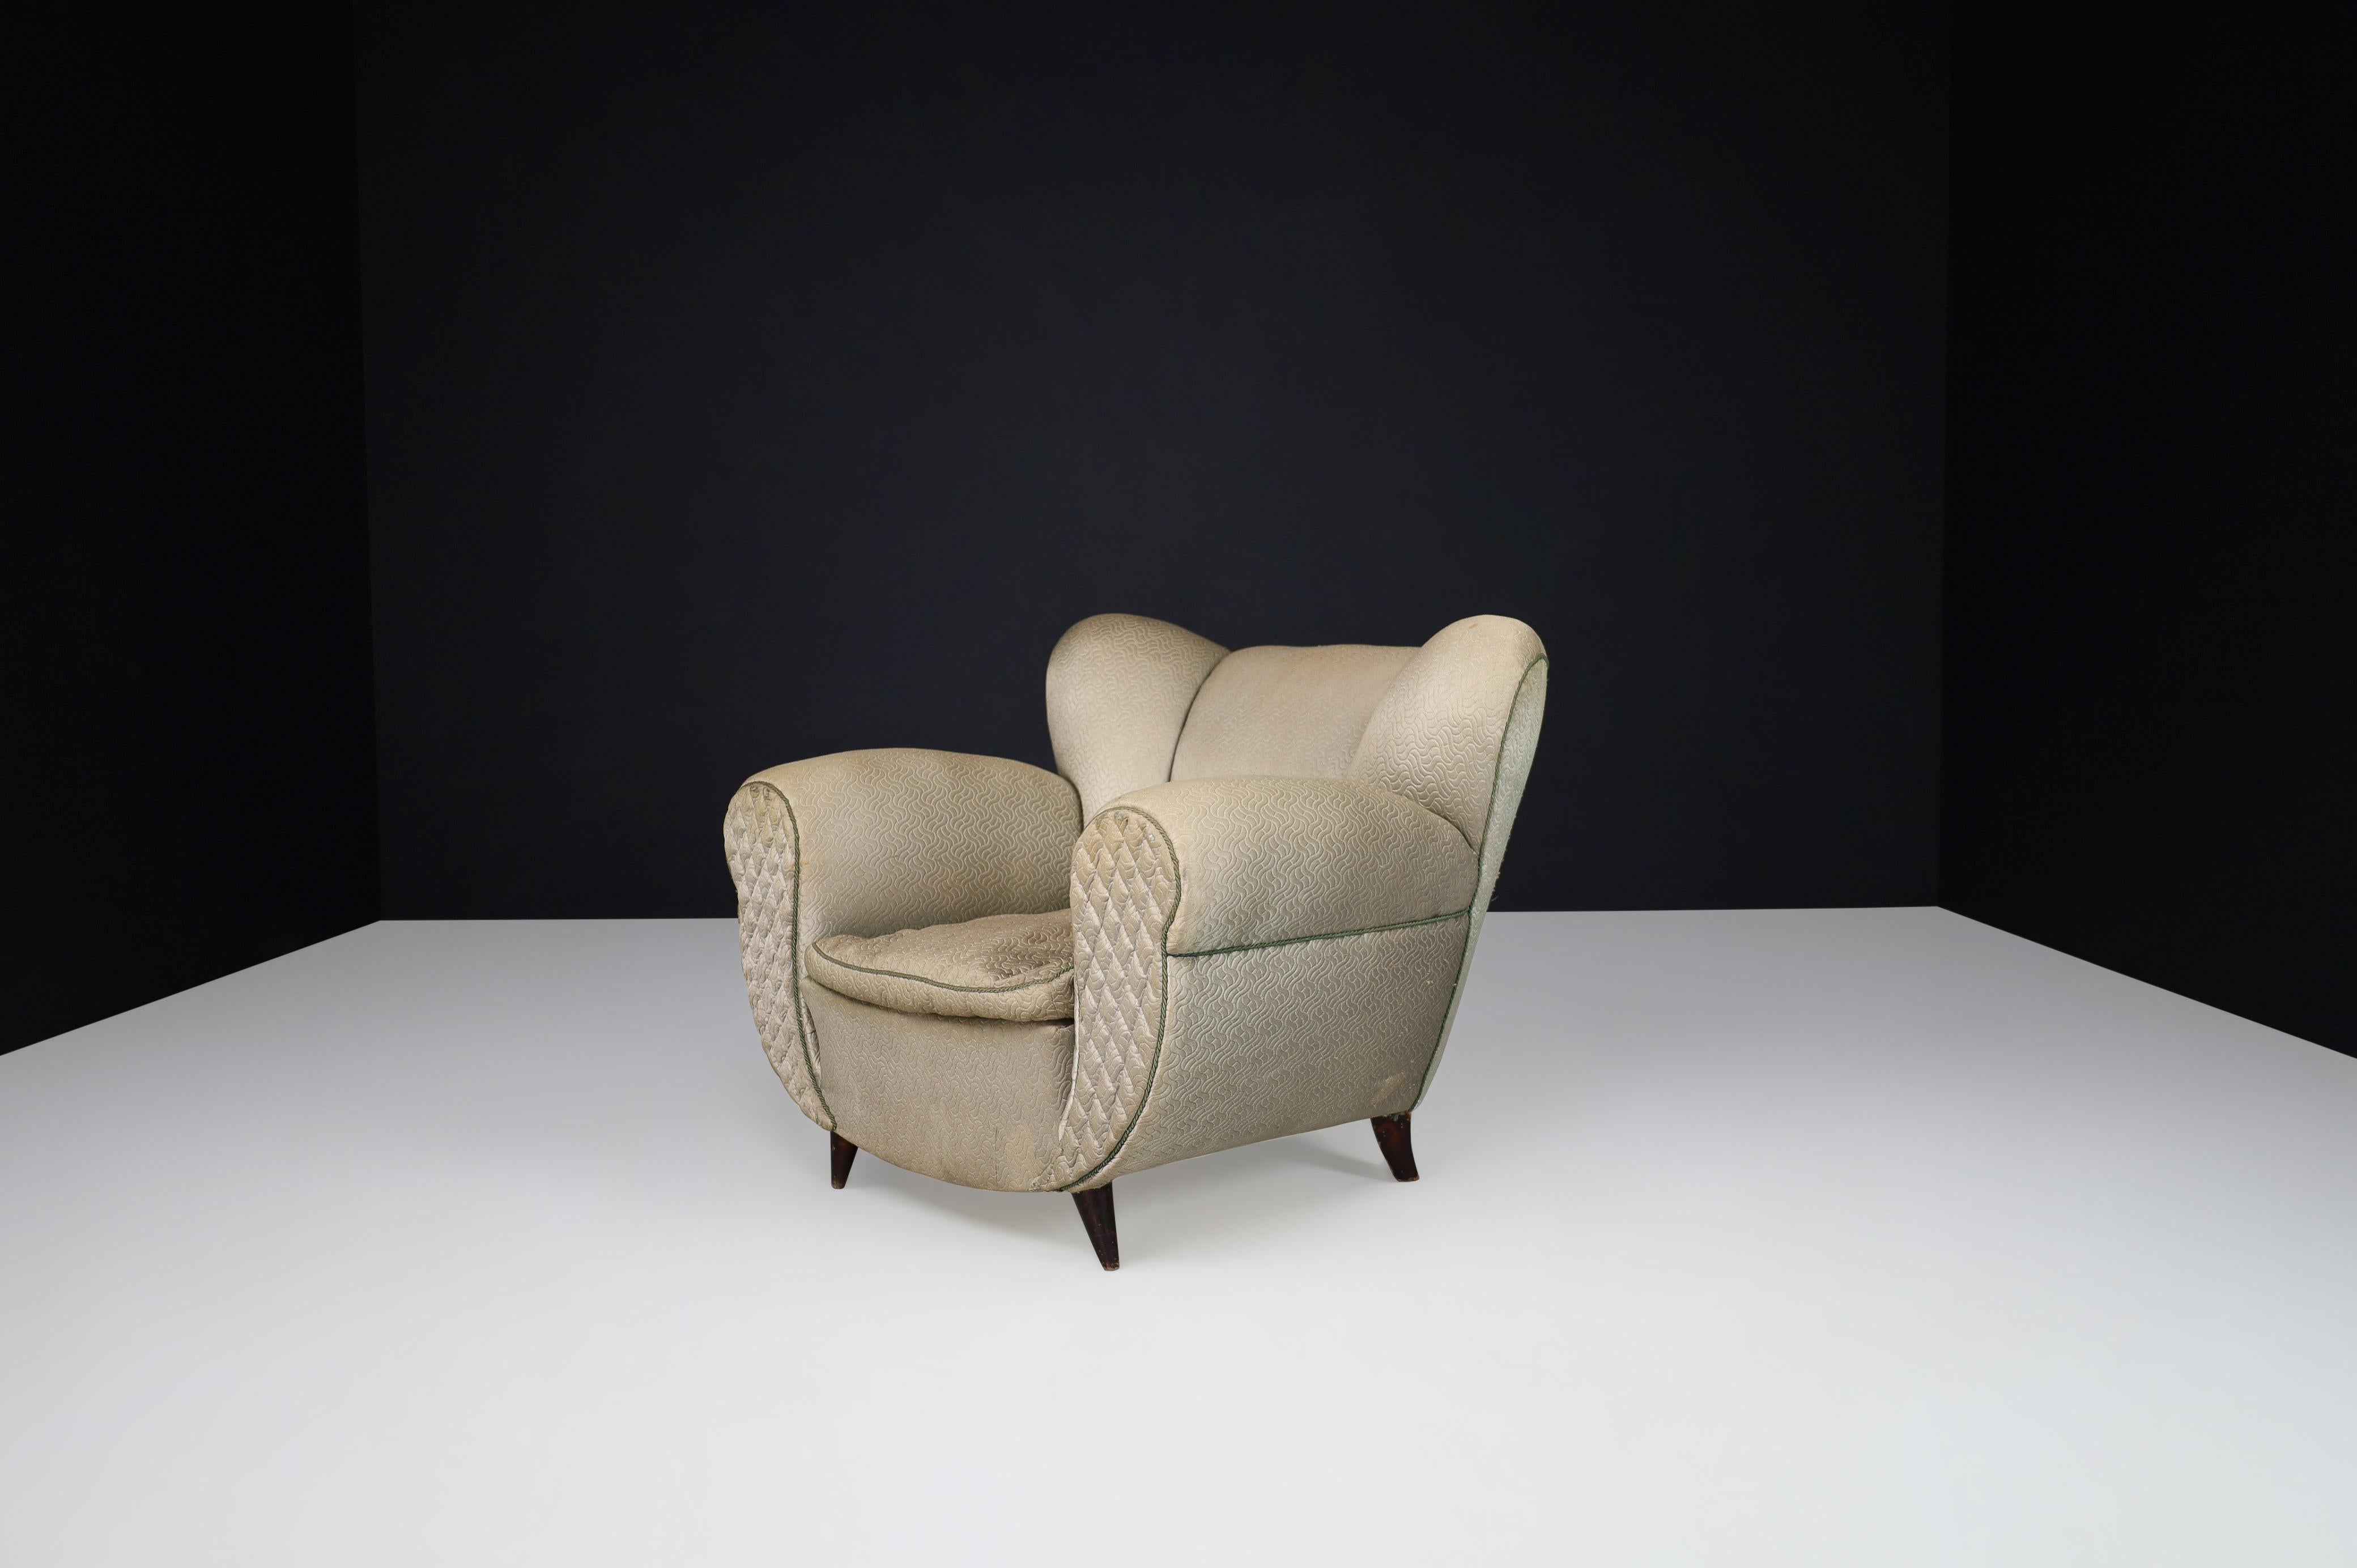 Italian Uglielmo Ulrich Art Deco Lounge Chairs in Original Fabric, Italy 1930s For Sale